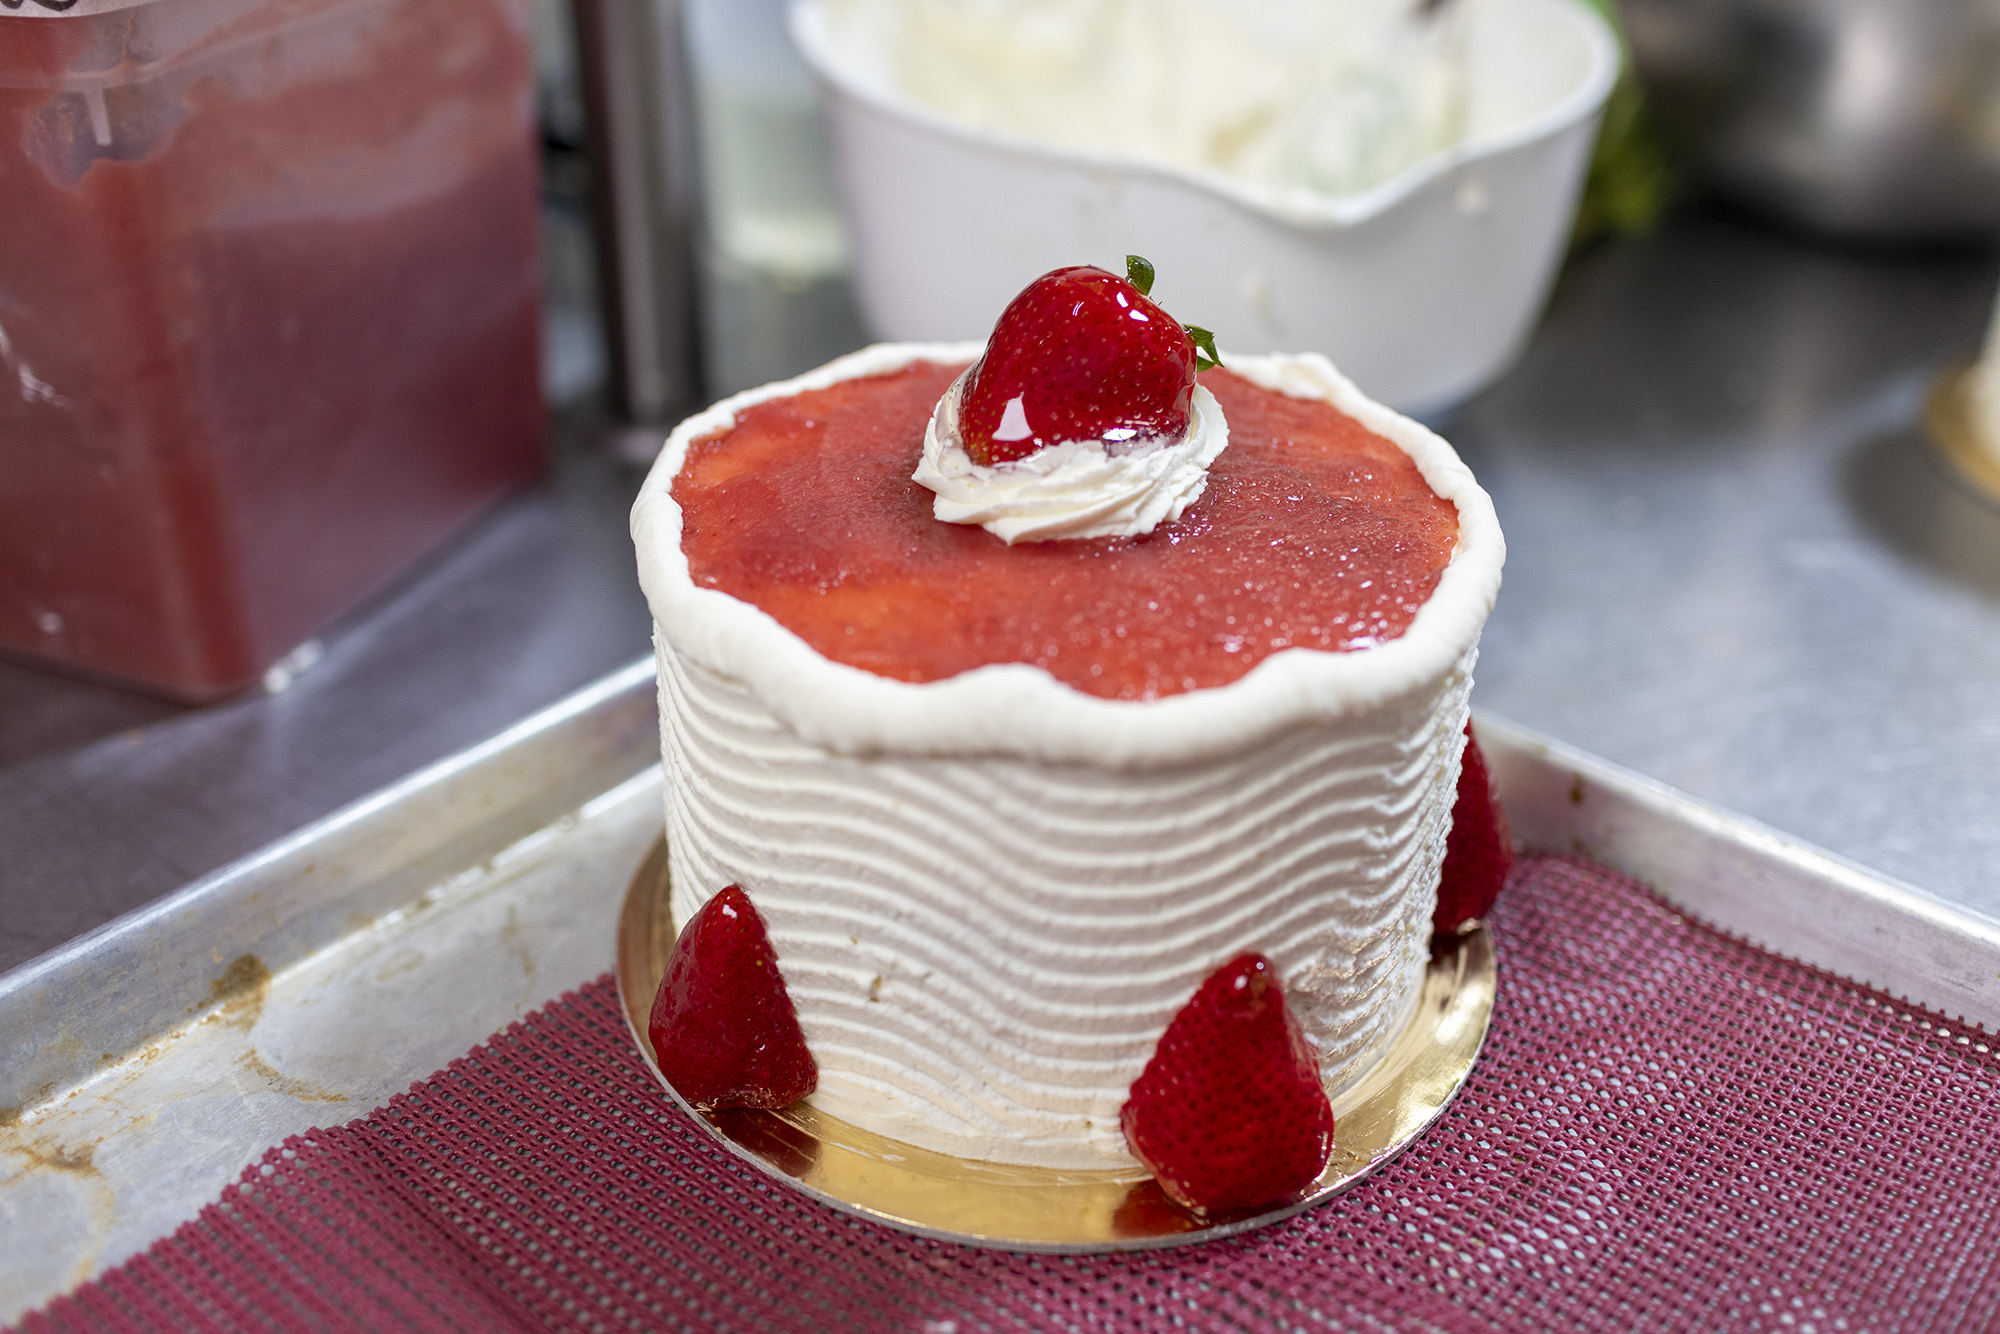 Strawberry and vanilla cake decorated with glazed strawberries